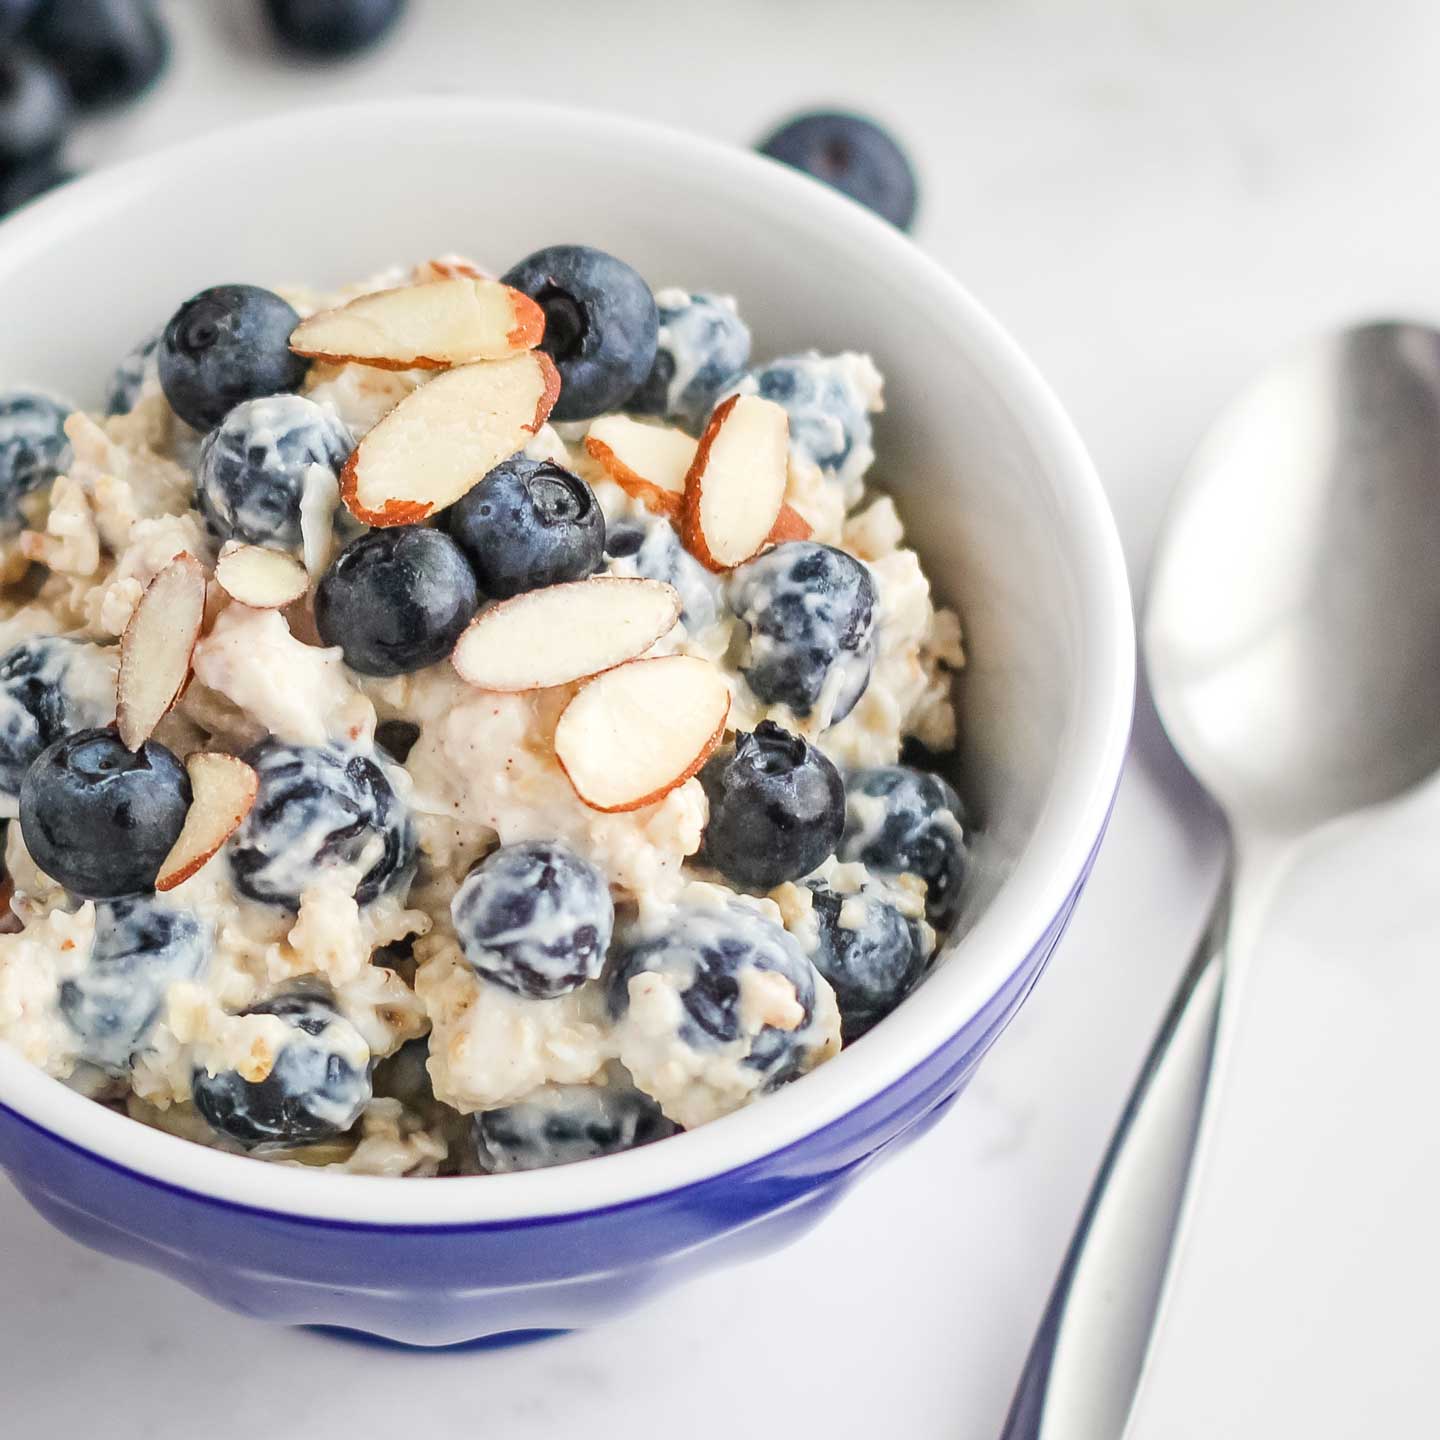 Easy Blueberry Overnight Oats | A 5-Minute Make-Ahead Power Breakfast!